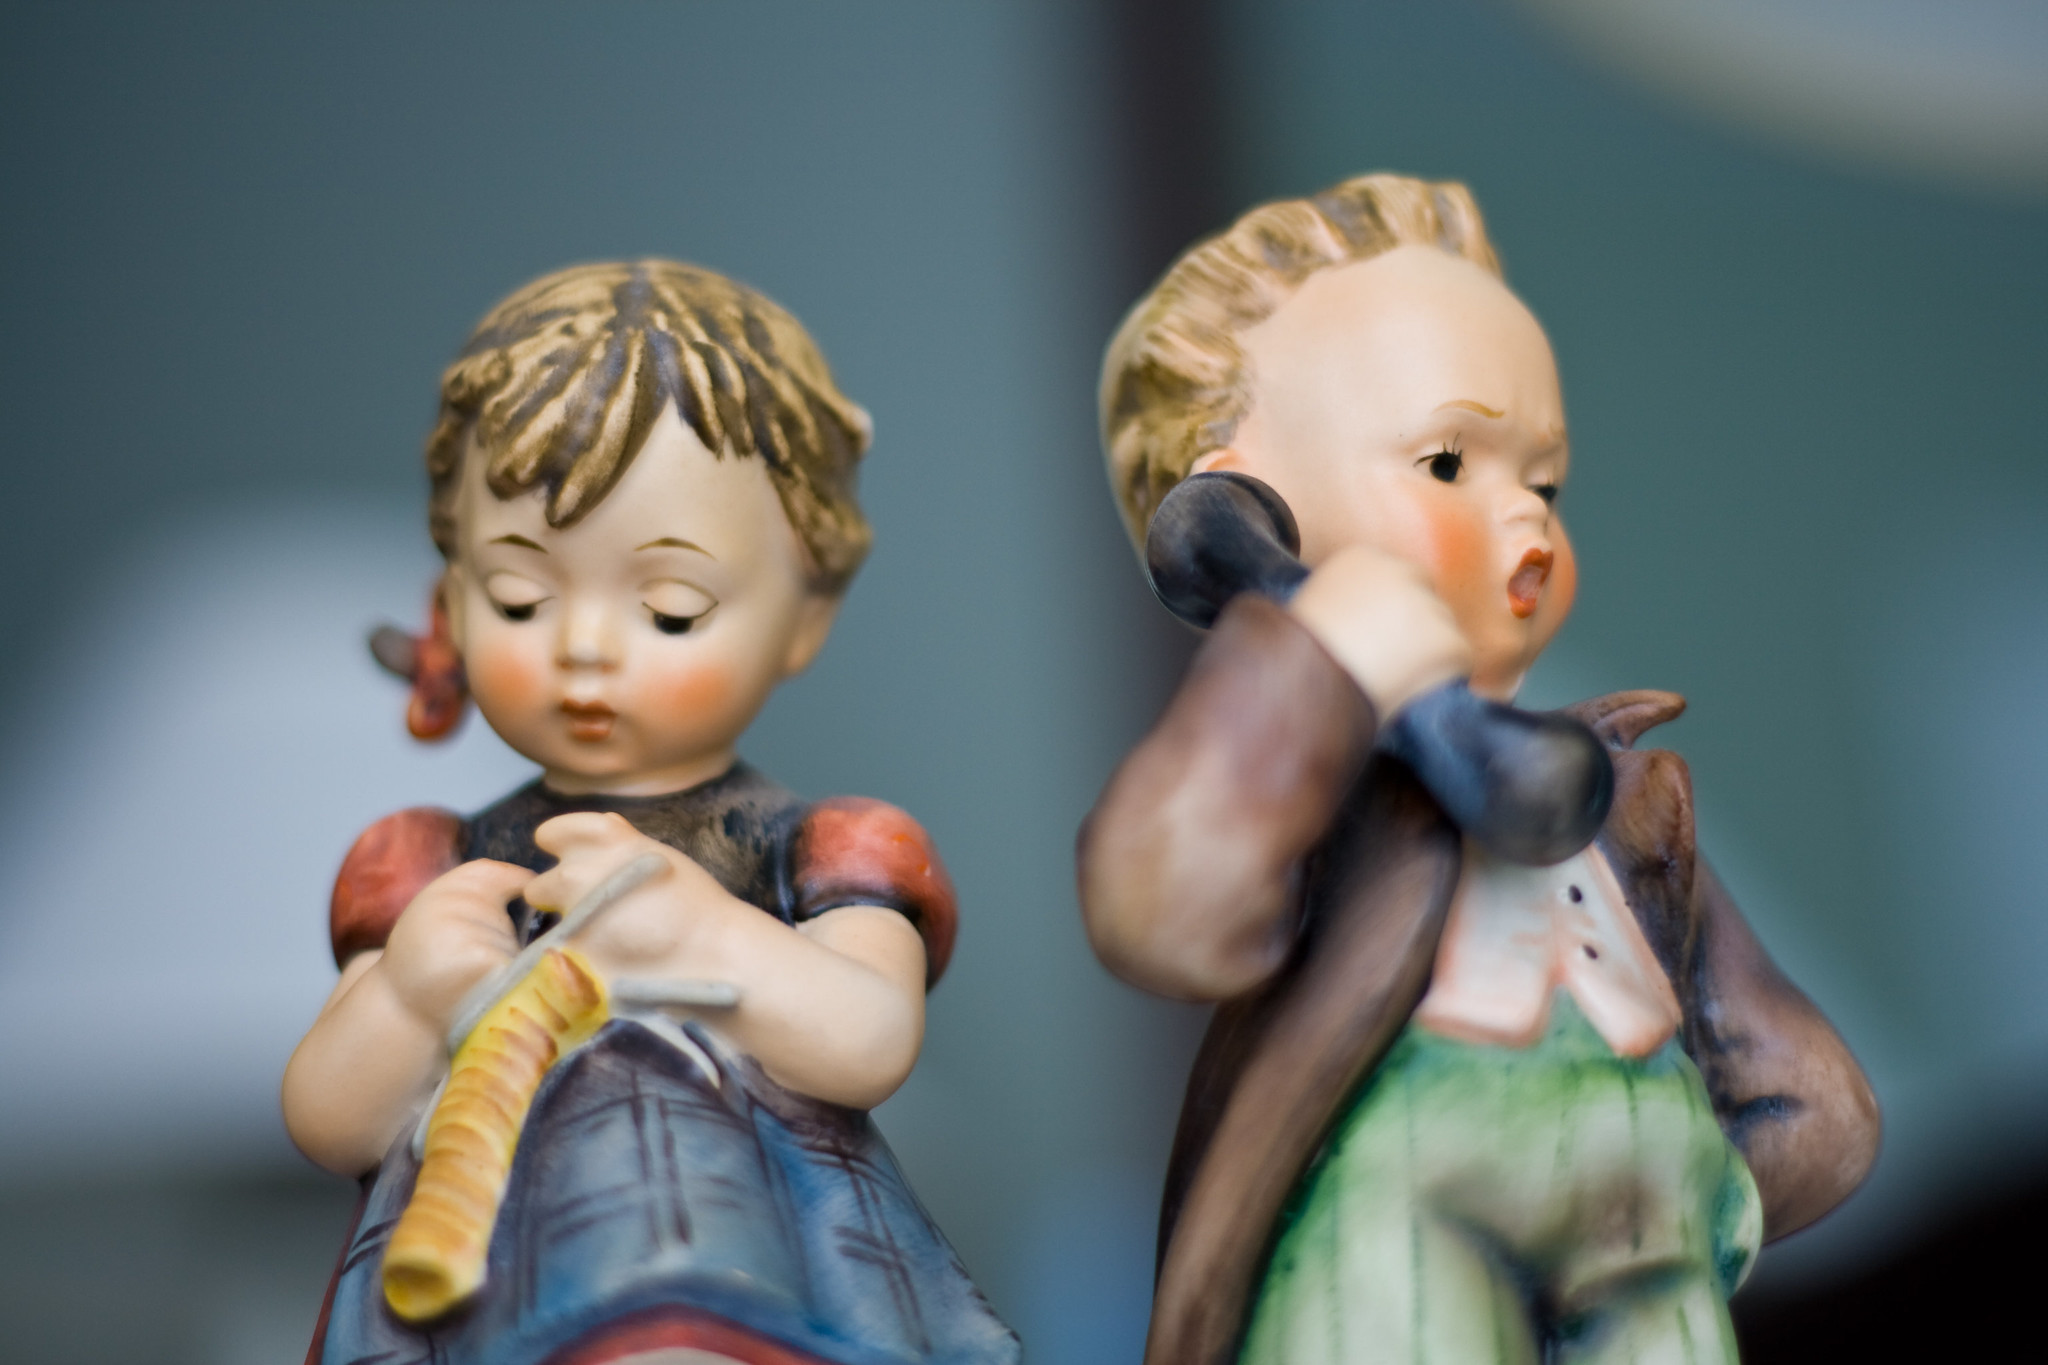 “Boy and Girl Hummel Figurines” © Jason Pratt; Creative Commons license